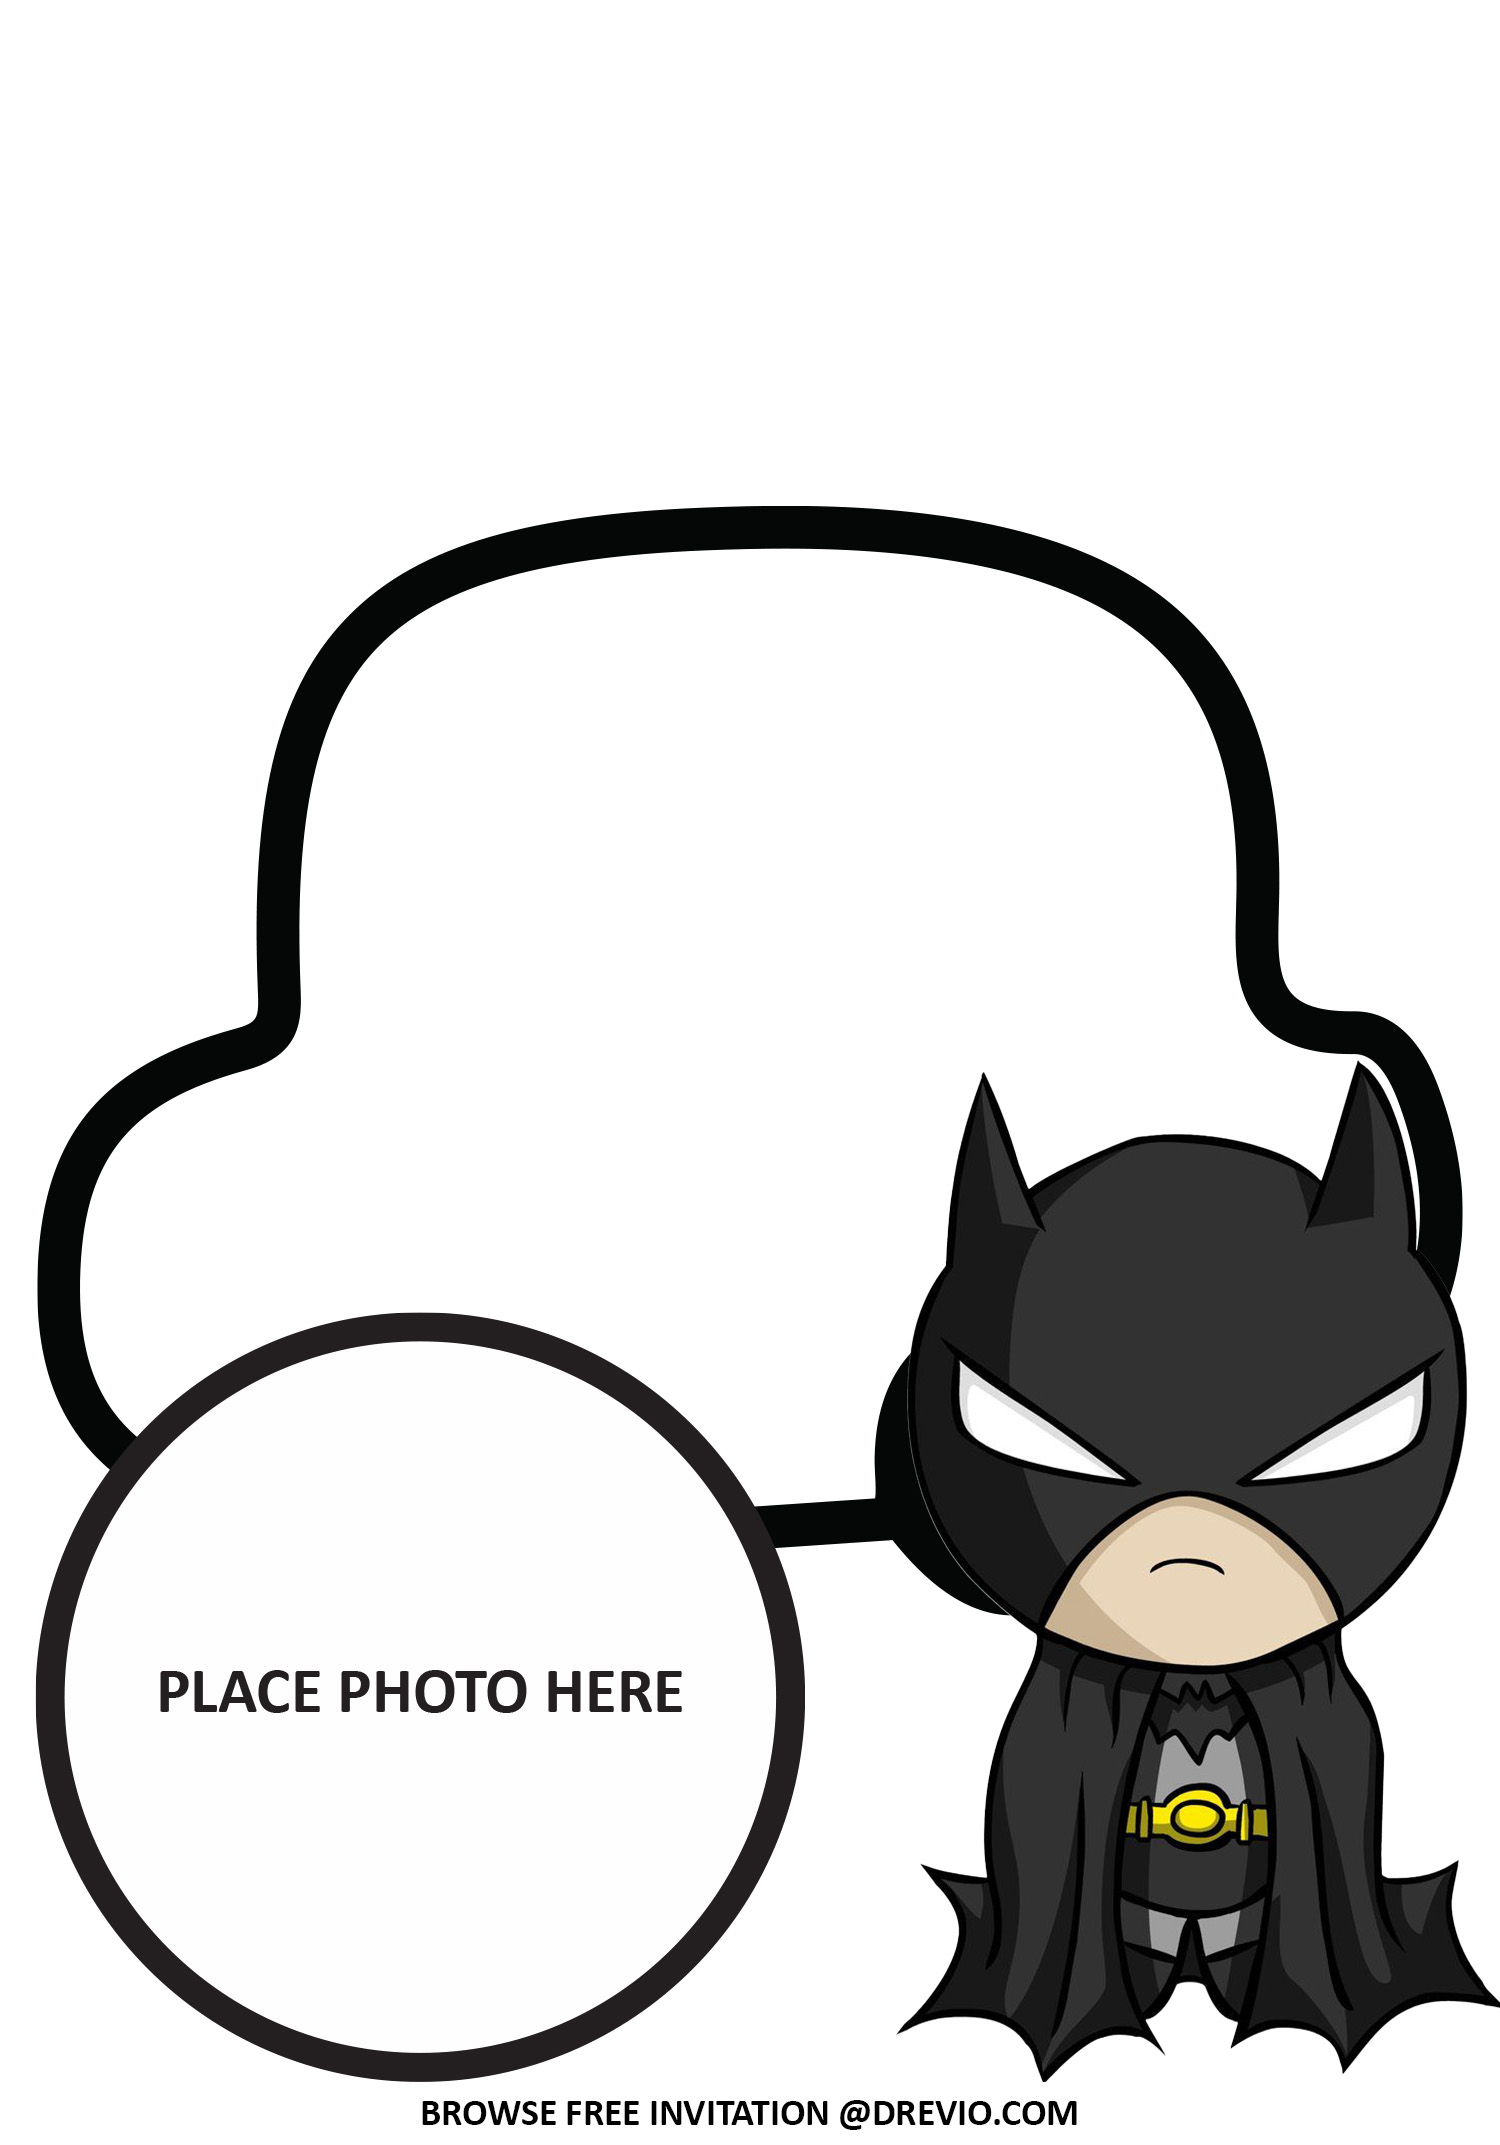 FREE Invitations) Batman Themed Baby Shower Invitations + Party Ideas |  Download Hundreds FREE PRINTABLE Birthday Invitation Templates